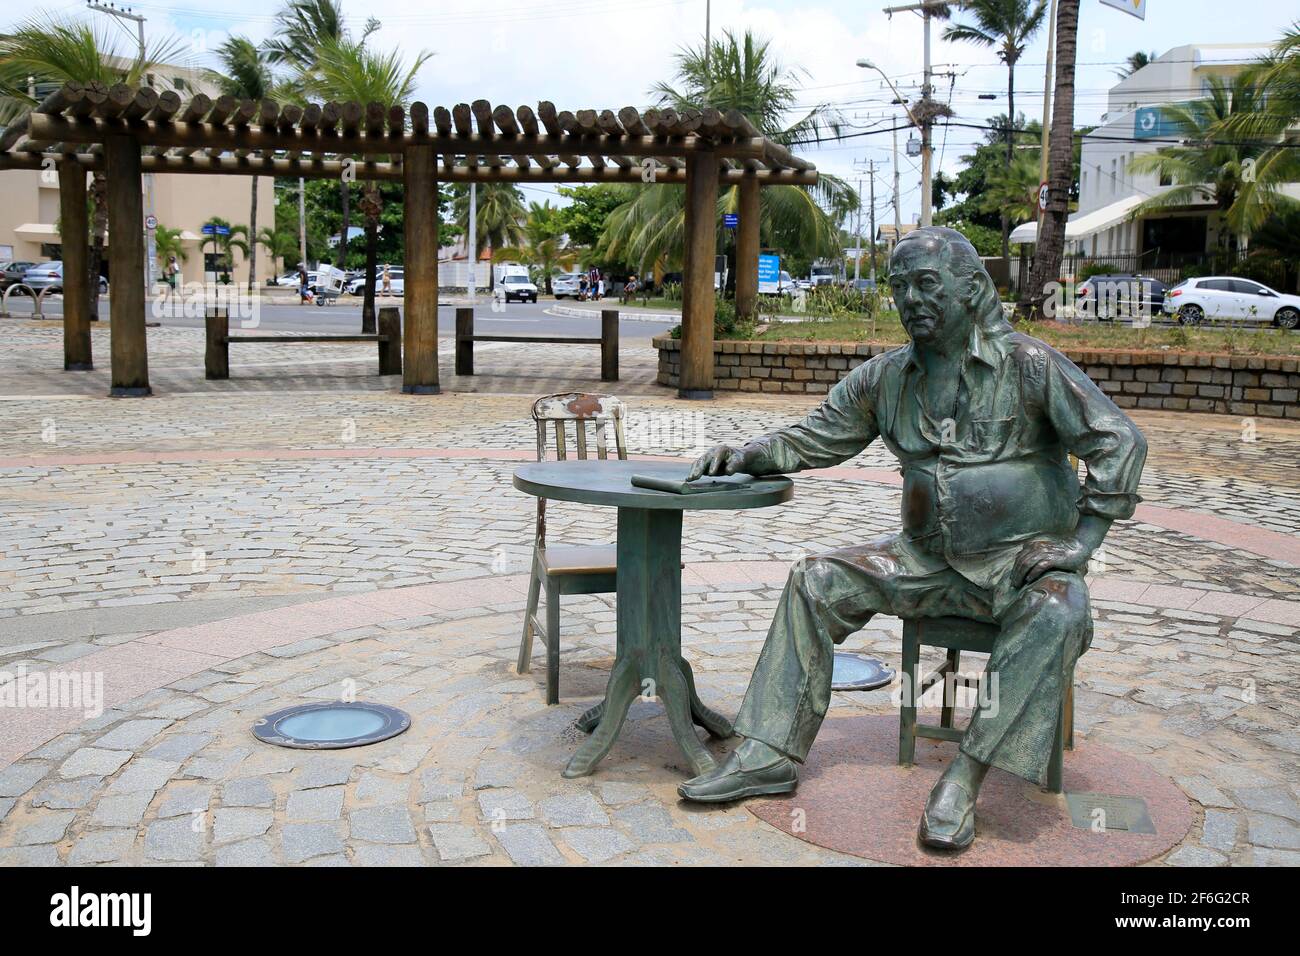 salvador, bahia, brazil - december 21, 2020: Statue of the poet Vinicius de Moraes is seen in the neighborhood of Itapua, in the city of Salvador. *** Stock Photo